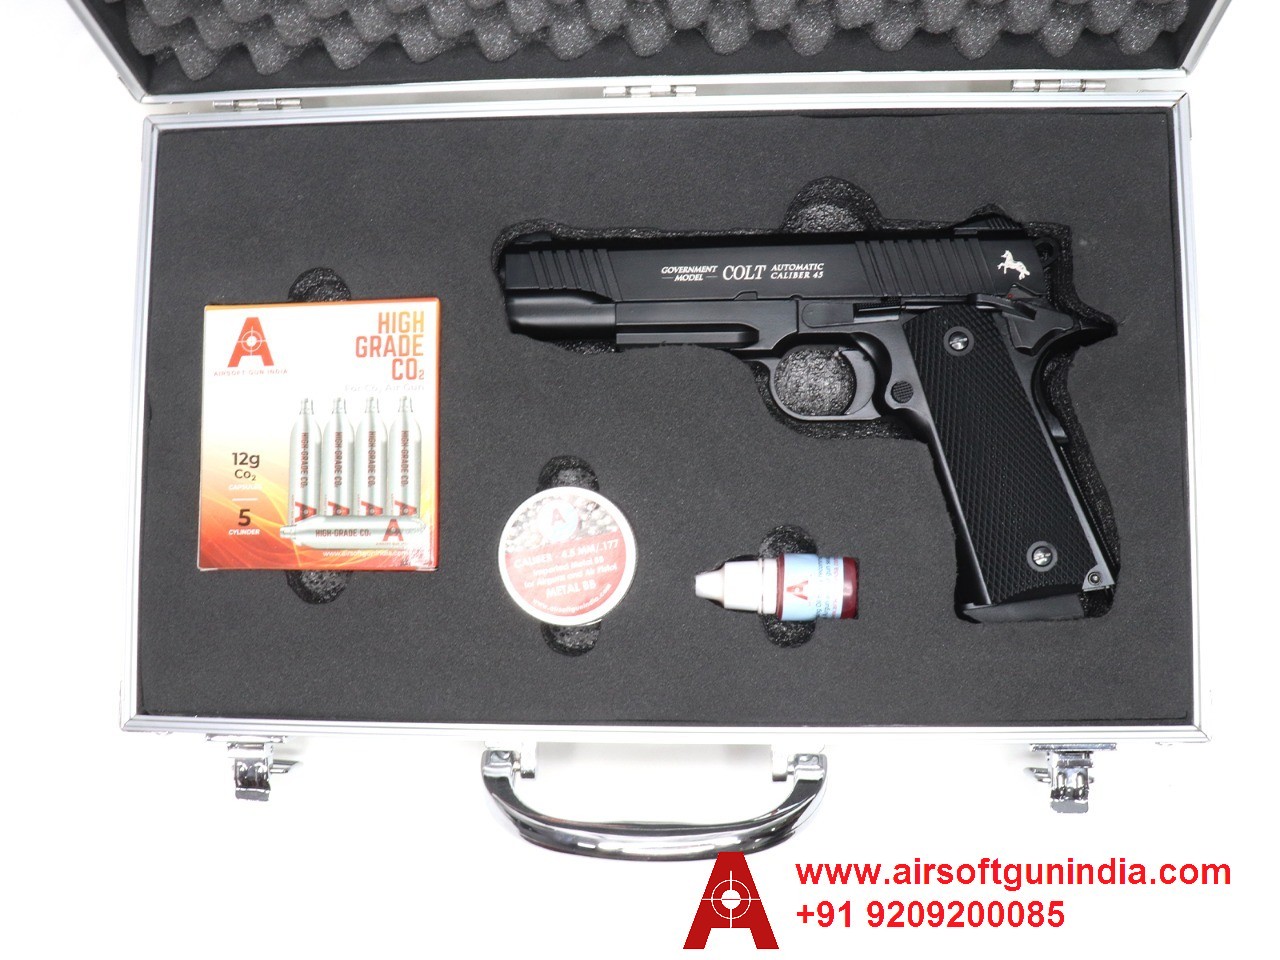 Customized Gun Case For Colt CQBP 1911 Co2 BB Pistol By Airsoft Gun India